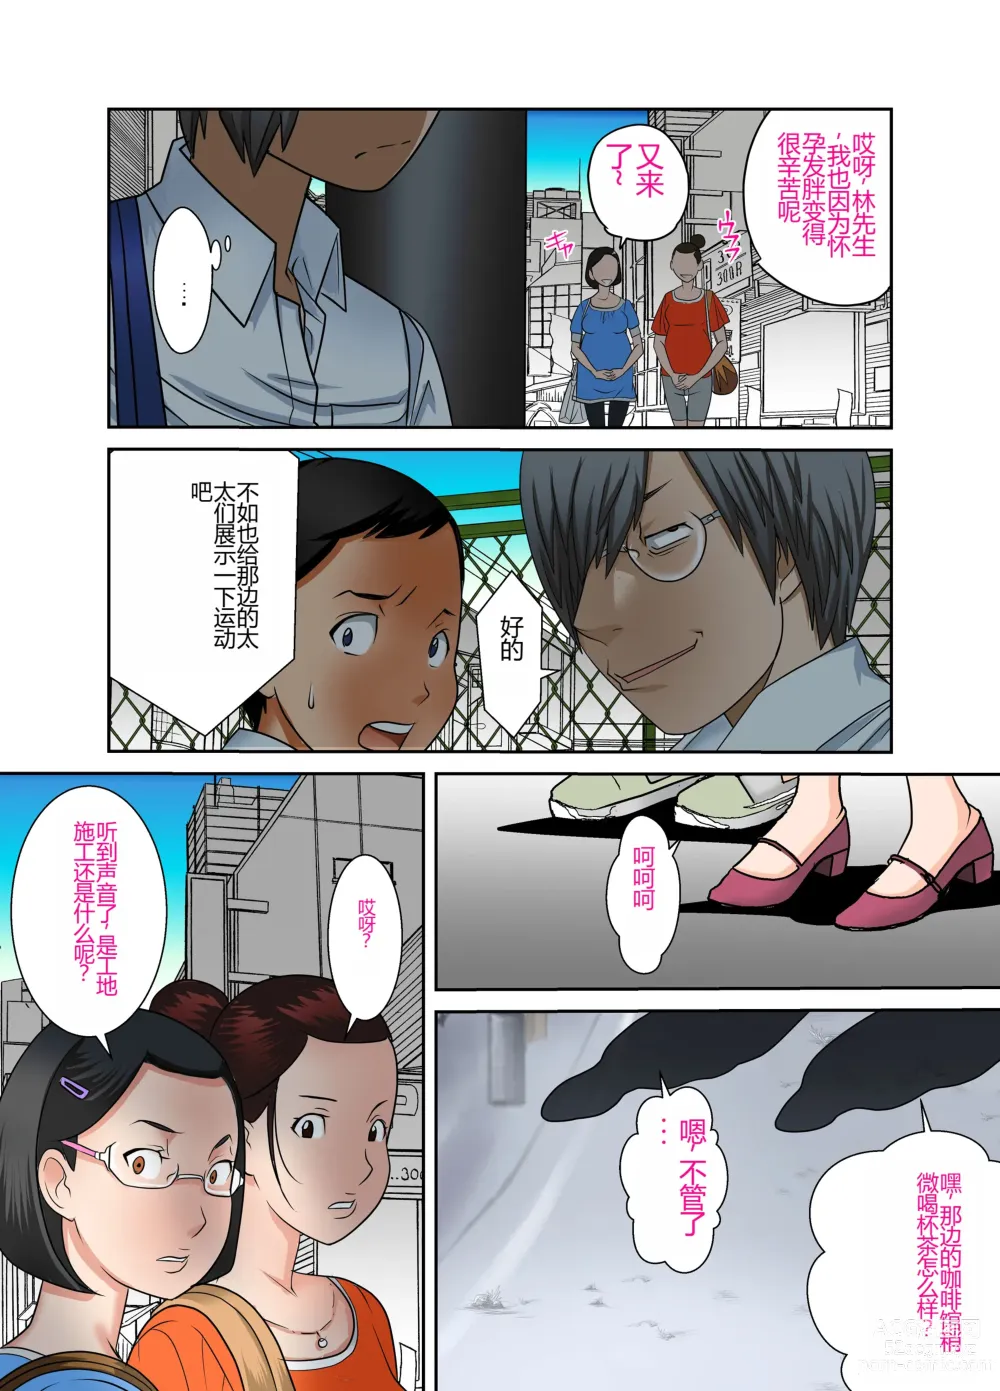 Page 9 of doujinshi #Ninpu Kari 2